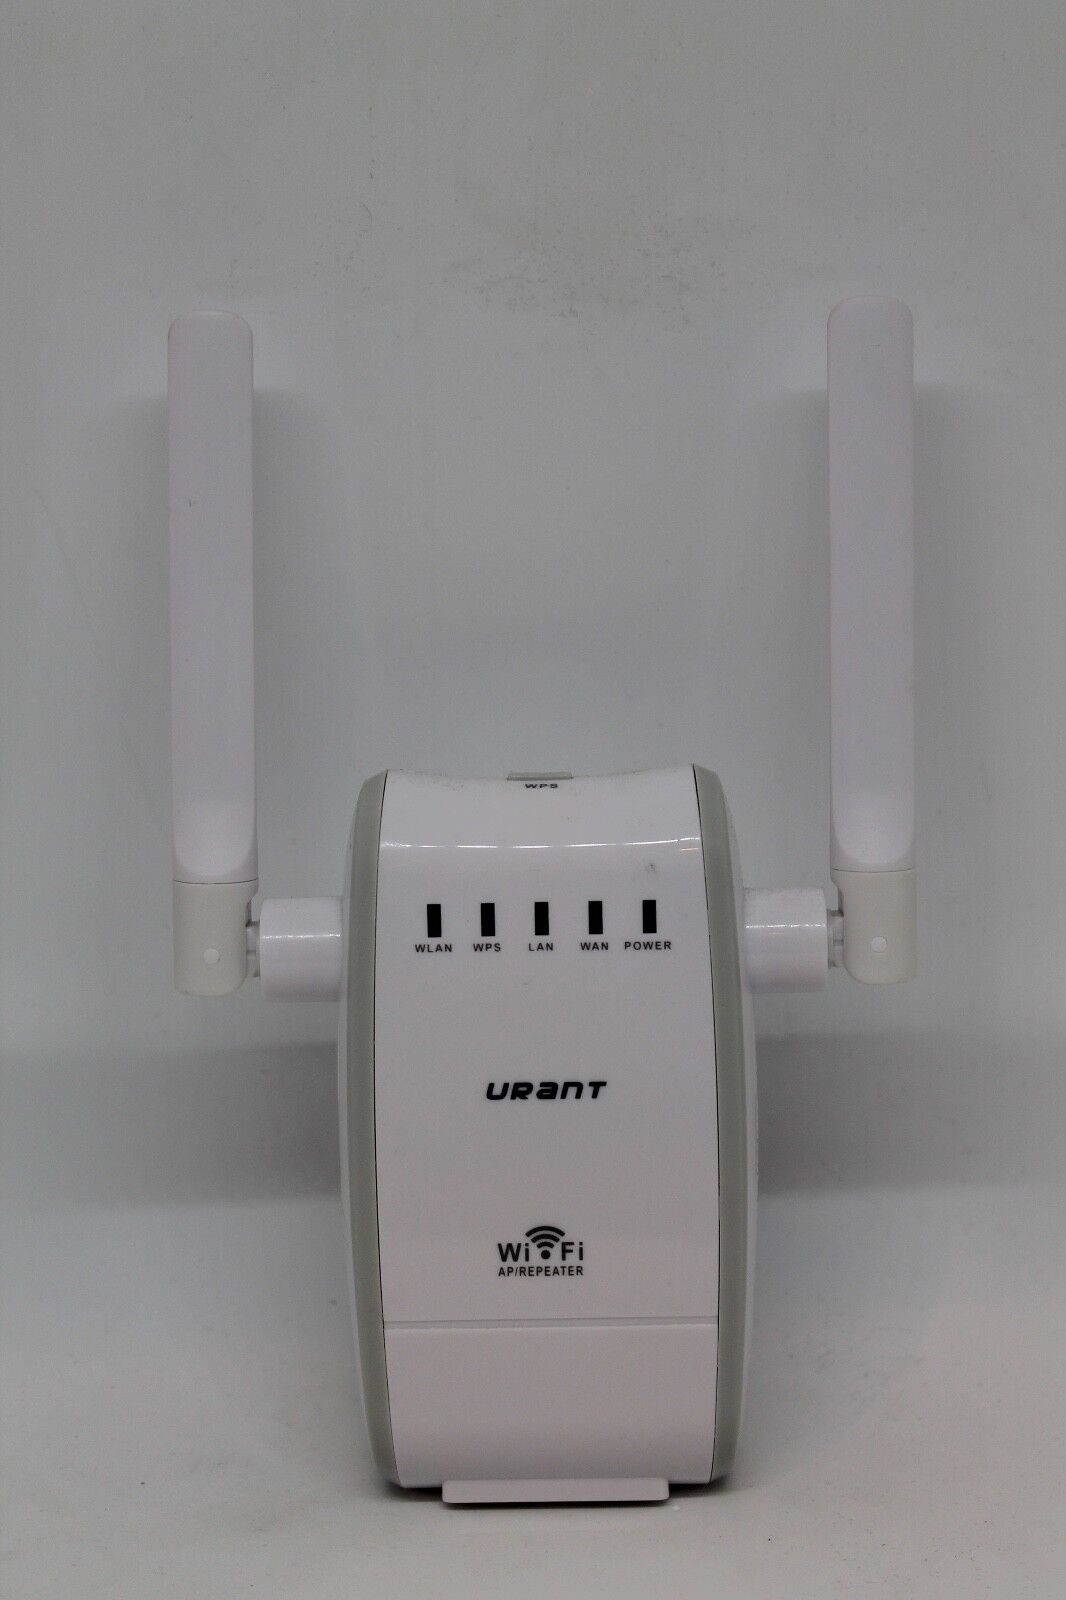 URANT N300 WiFi Range Extender Booster Wireless Router WiFi Access Point/ Rou...